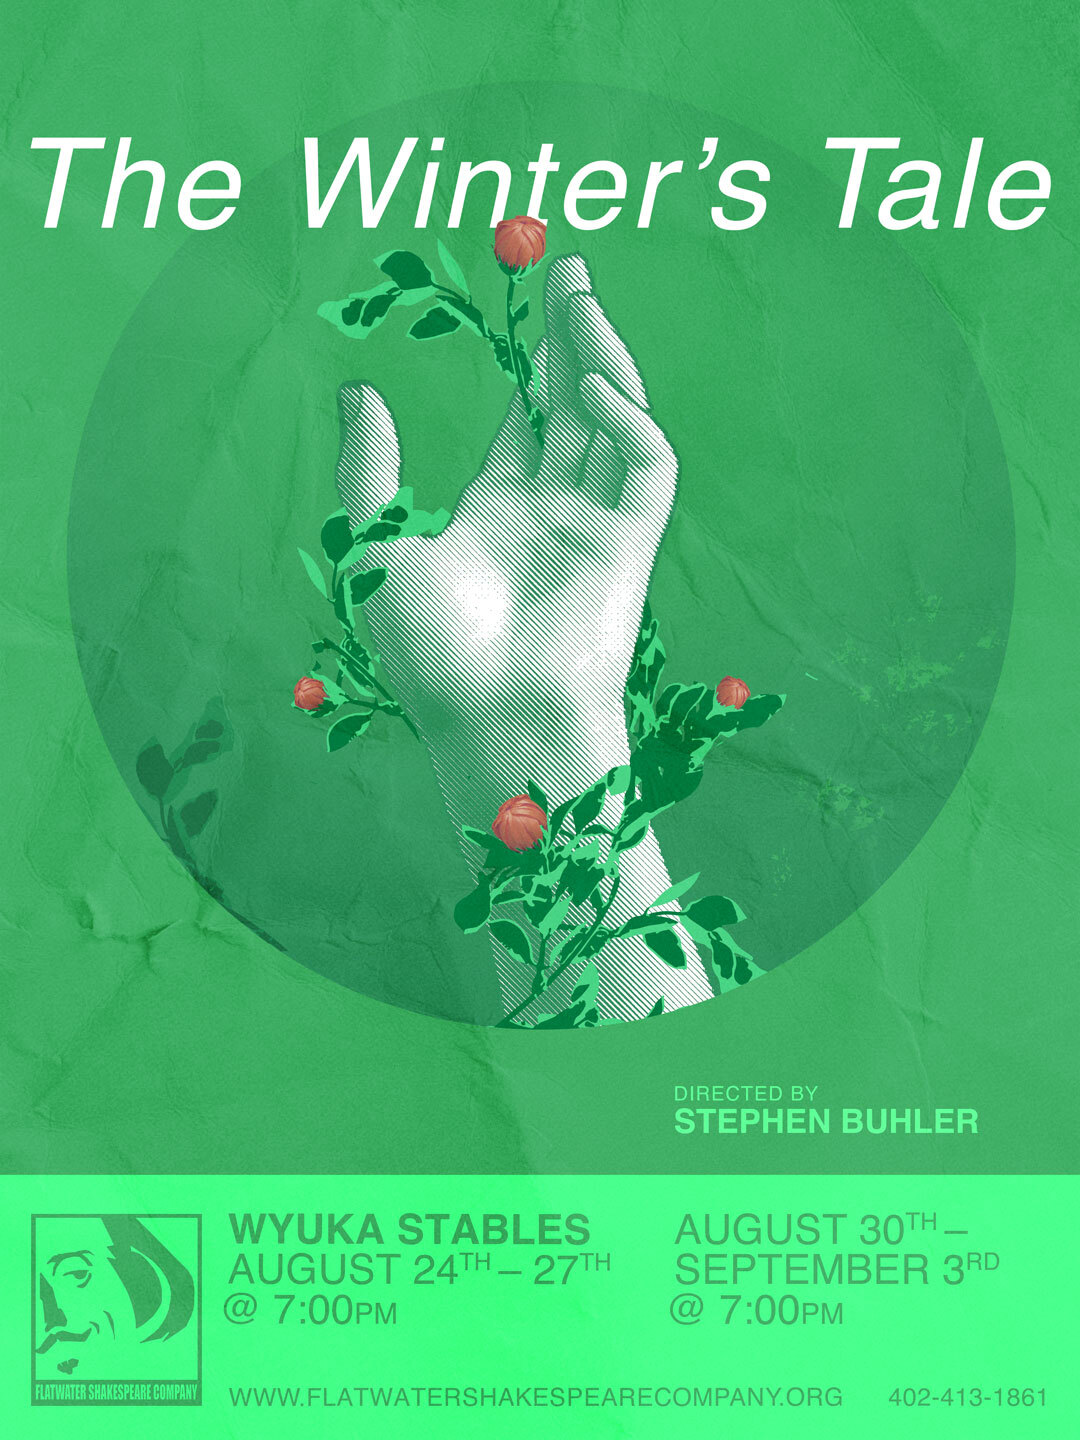 8/26 STU - STUDENT: Sat. August 26, 2023 | 7:00 p.m. - 10:00 p.m. CST | Wyuka Stables (The Winter's Tale)